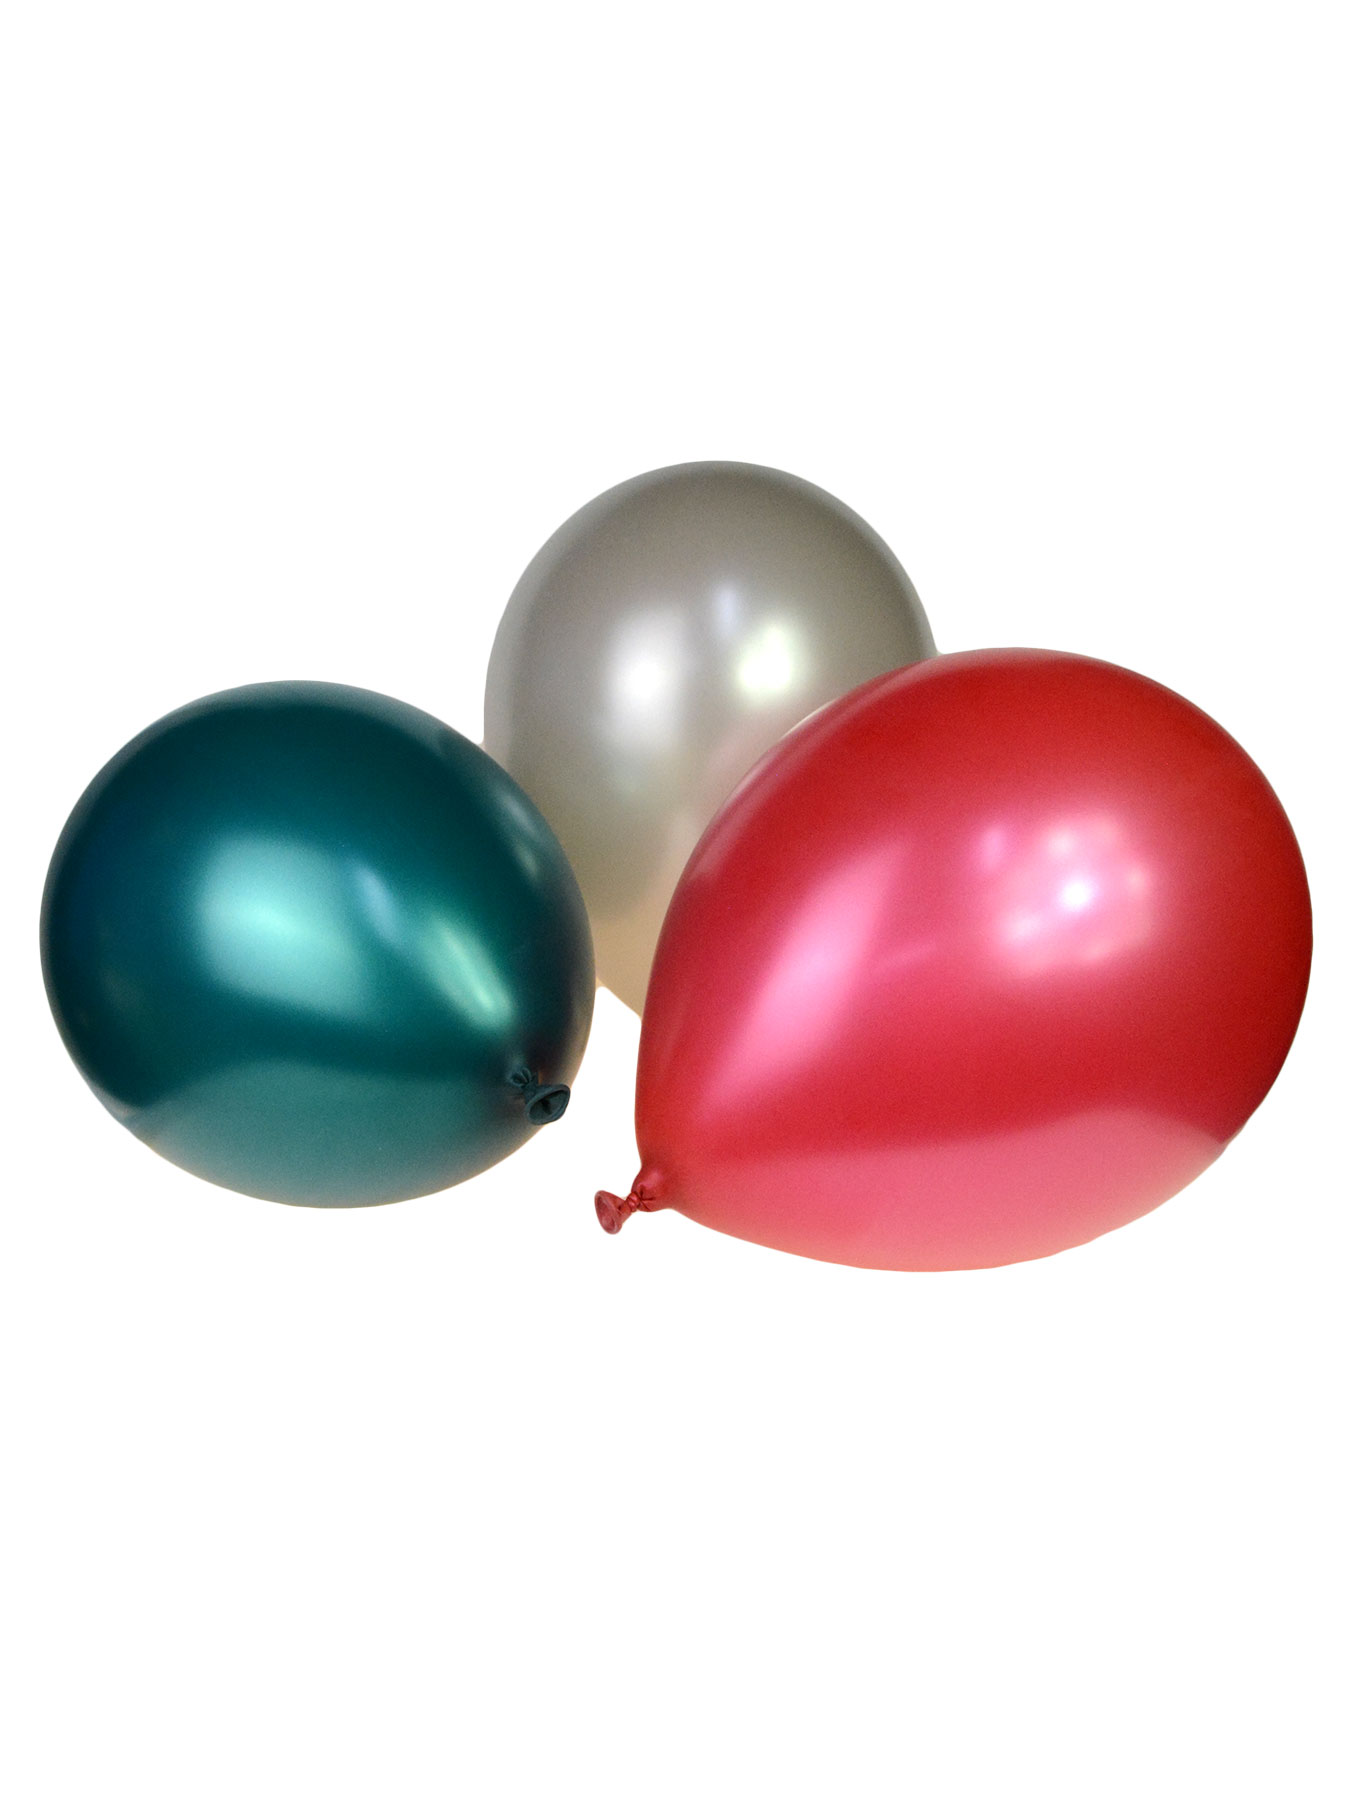 10Stk Luftballons 30cm Metallic Baby